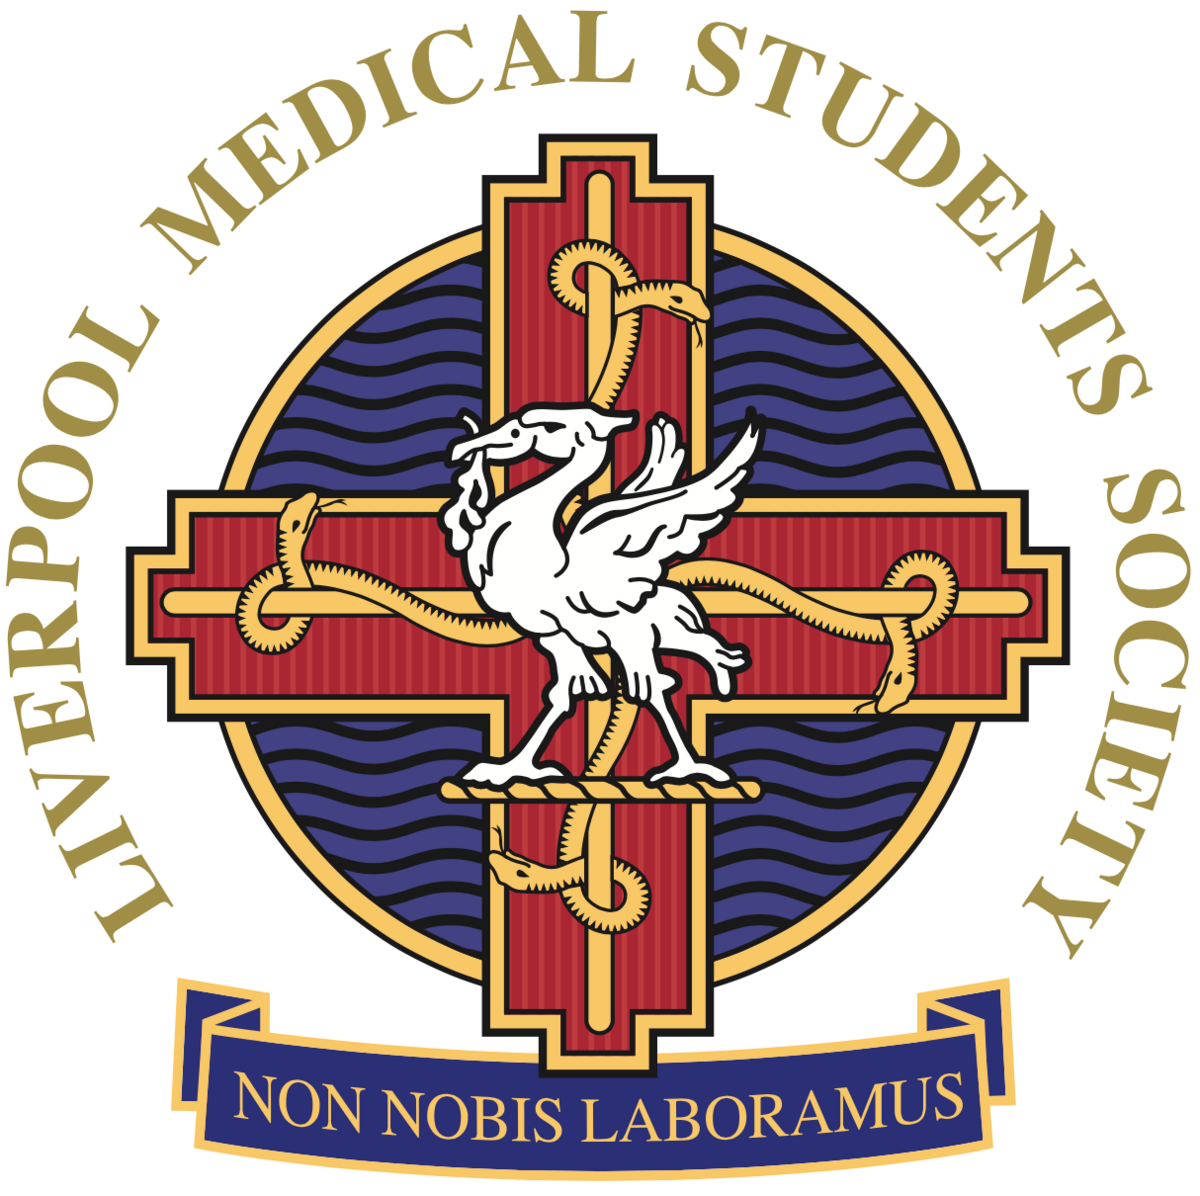 Liverpool Medical Students Society - Wikipedia